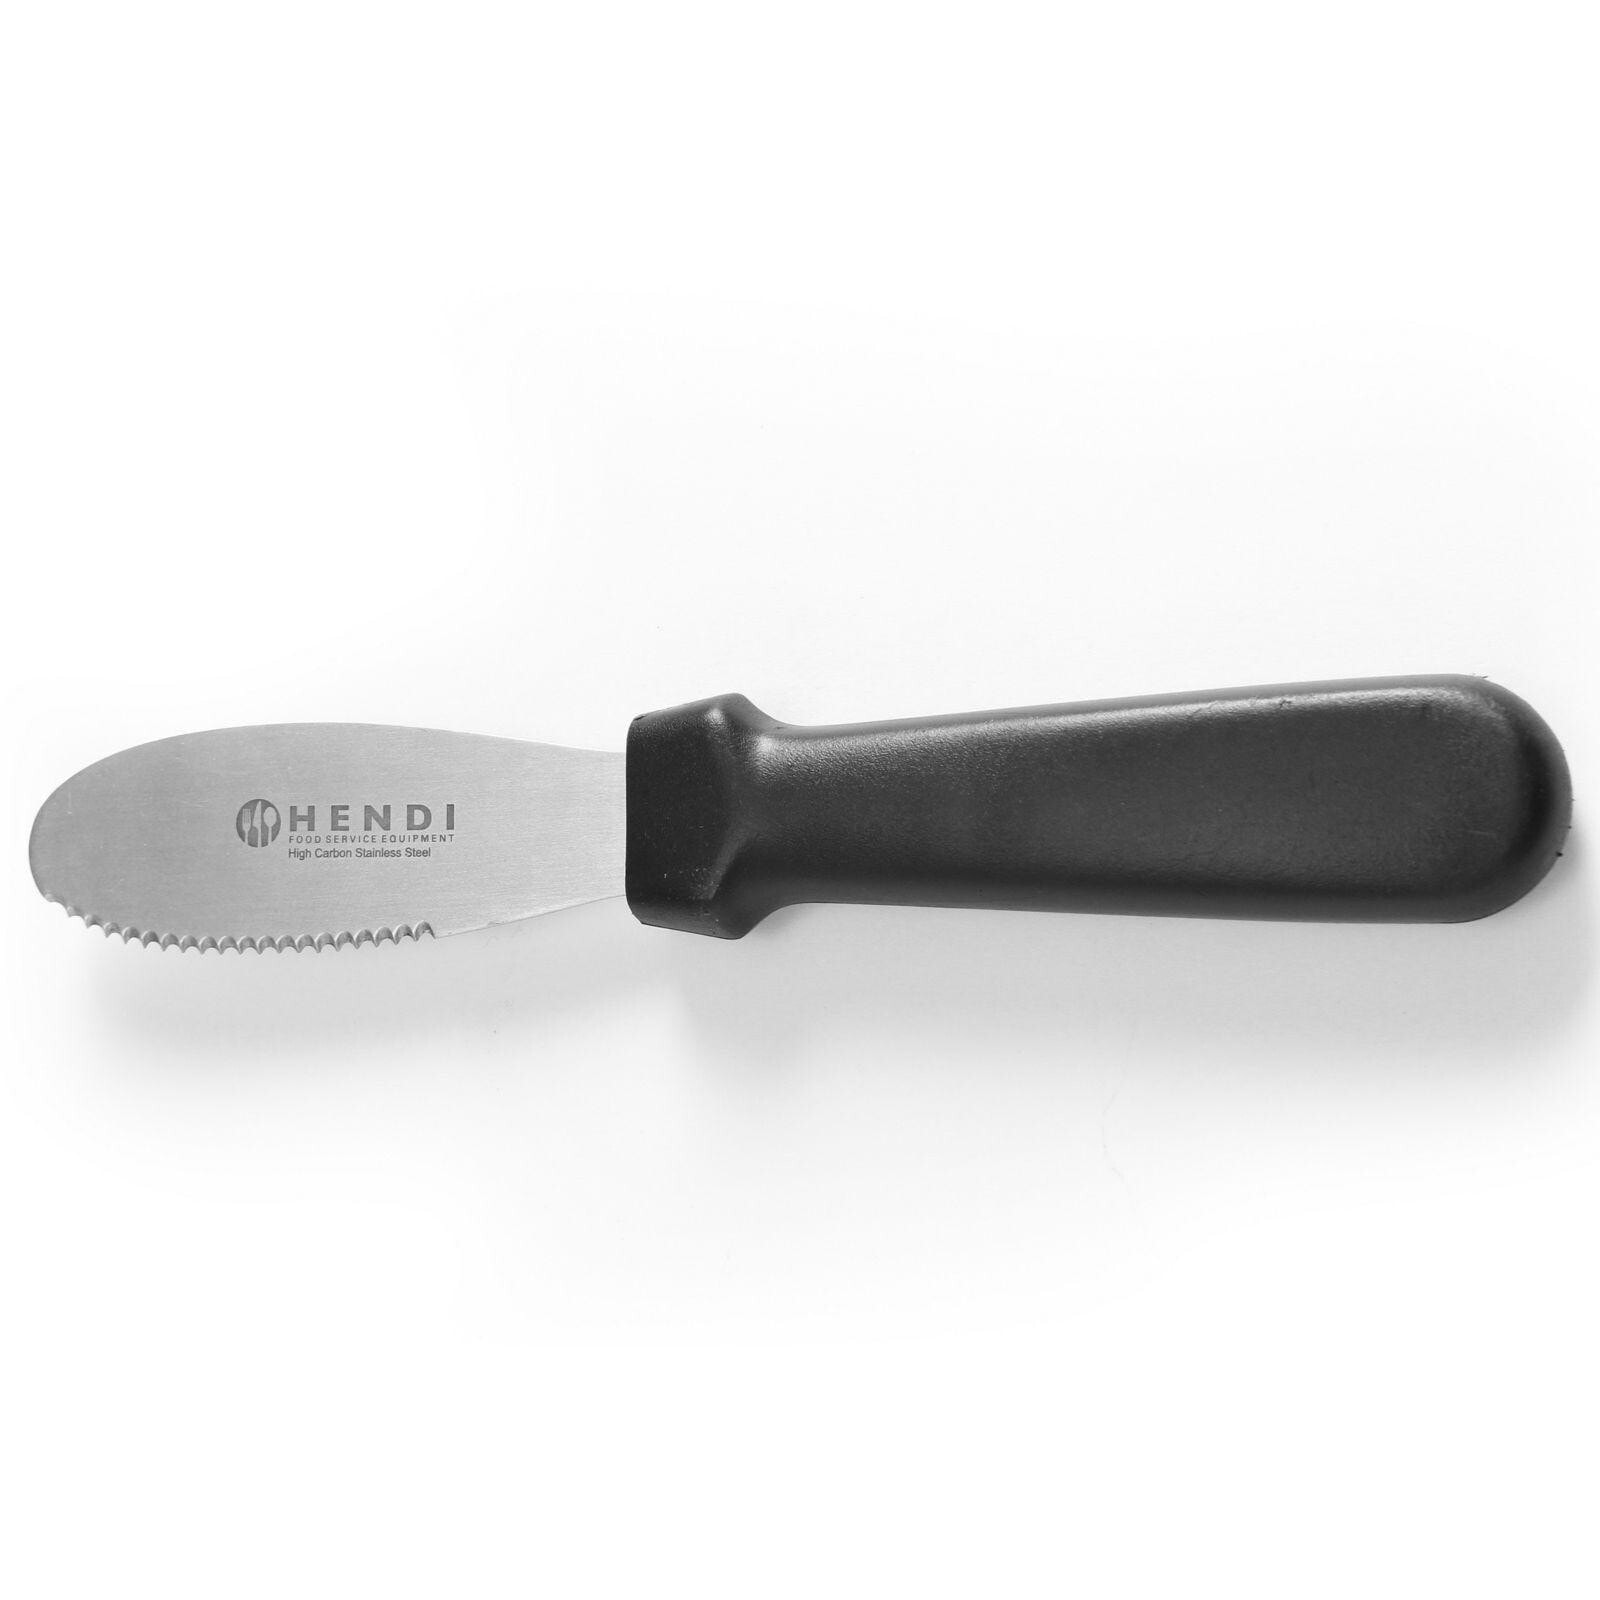 Stainless steel serrated grease knife - Hendi 855768